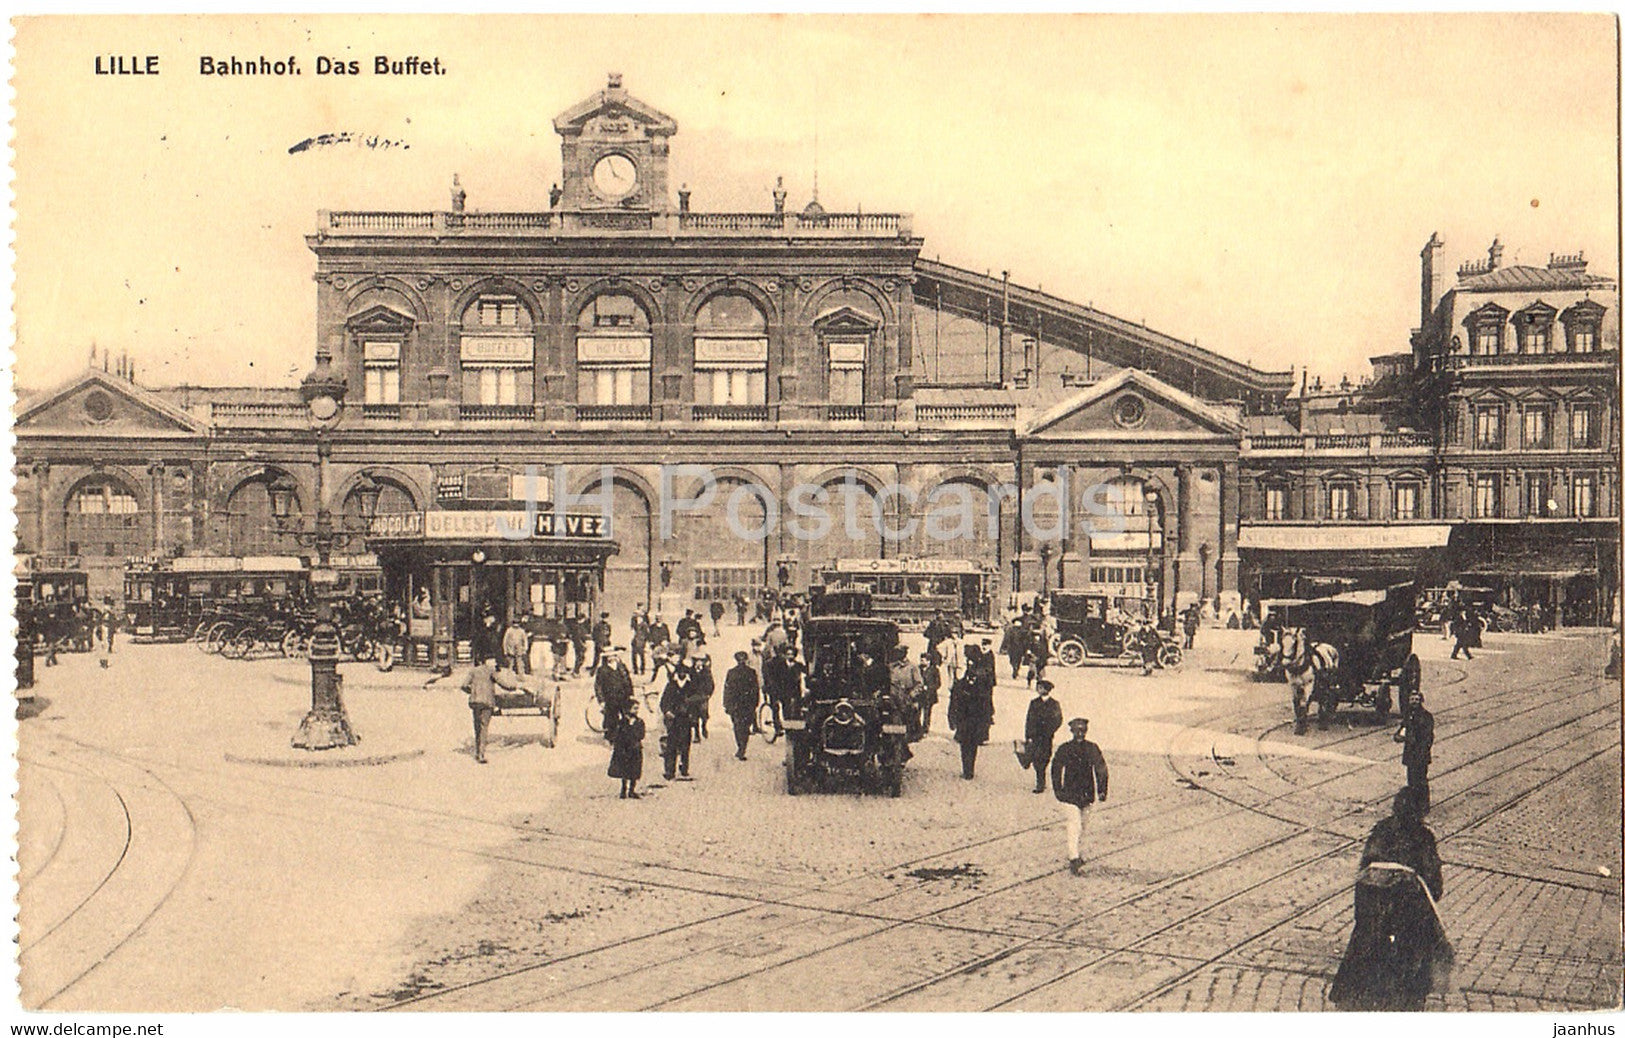 Lille - Bahnhof - Das Buffet - old cars - tram - railway station - Feldpost - old postcard - France - used - JH Postcards